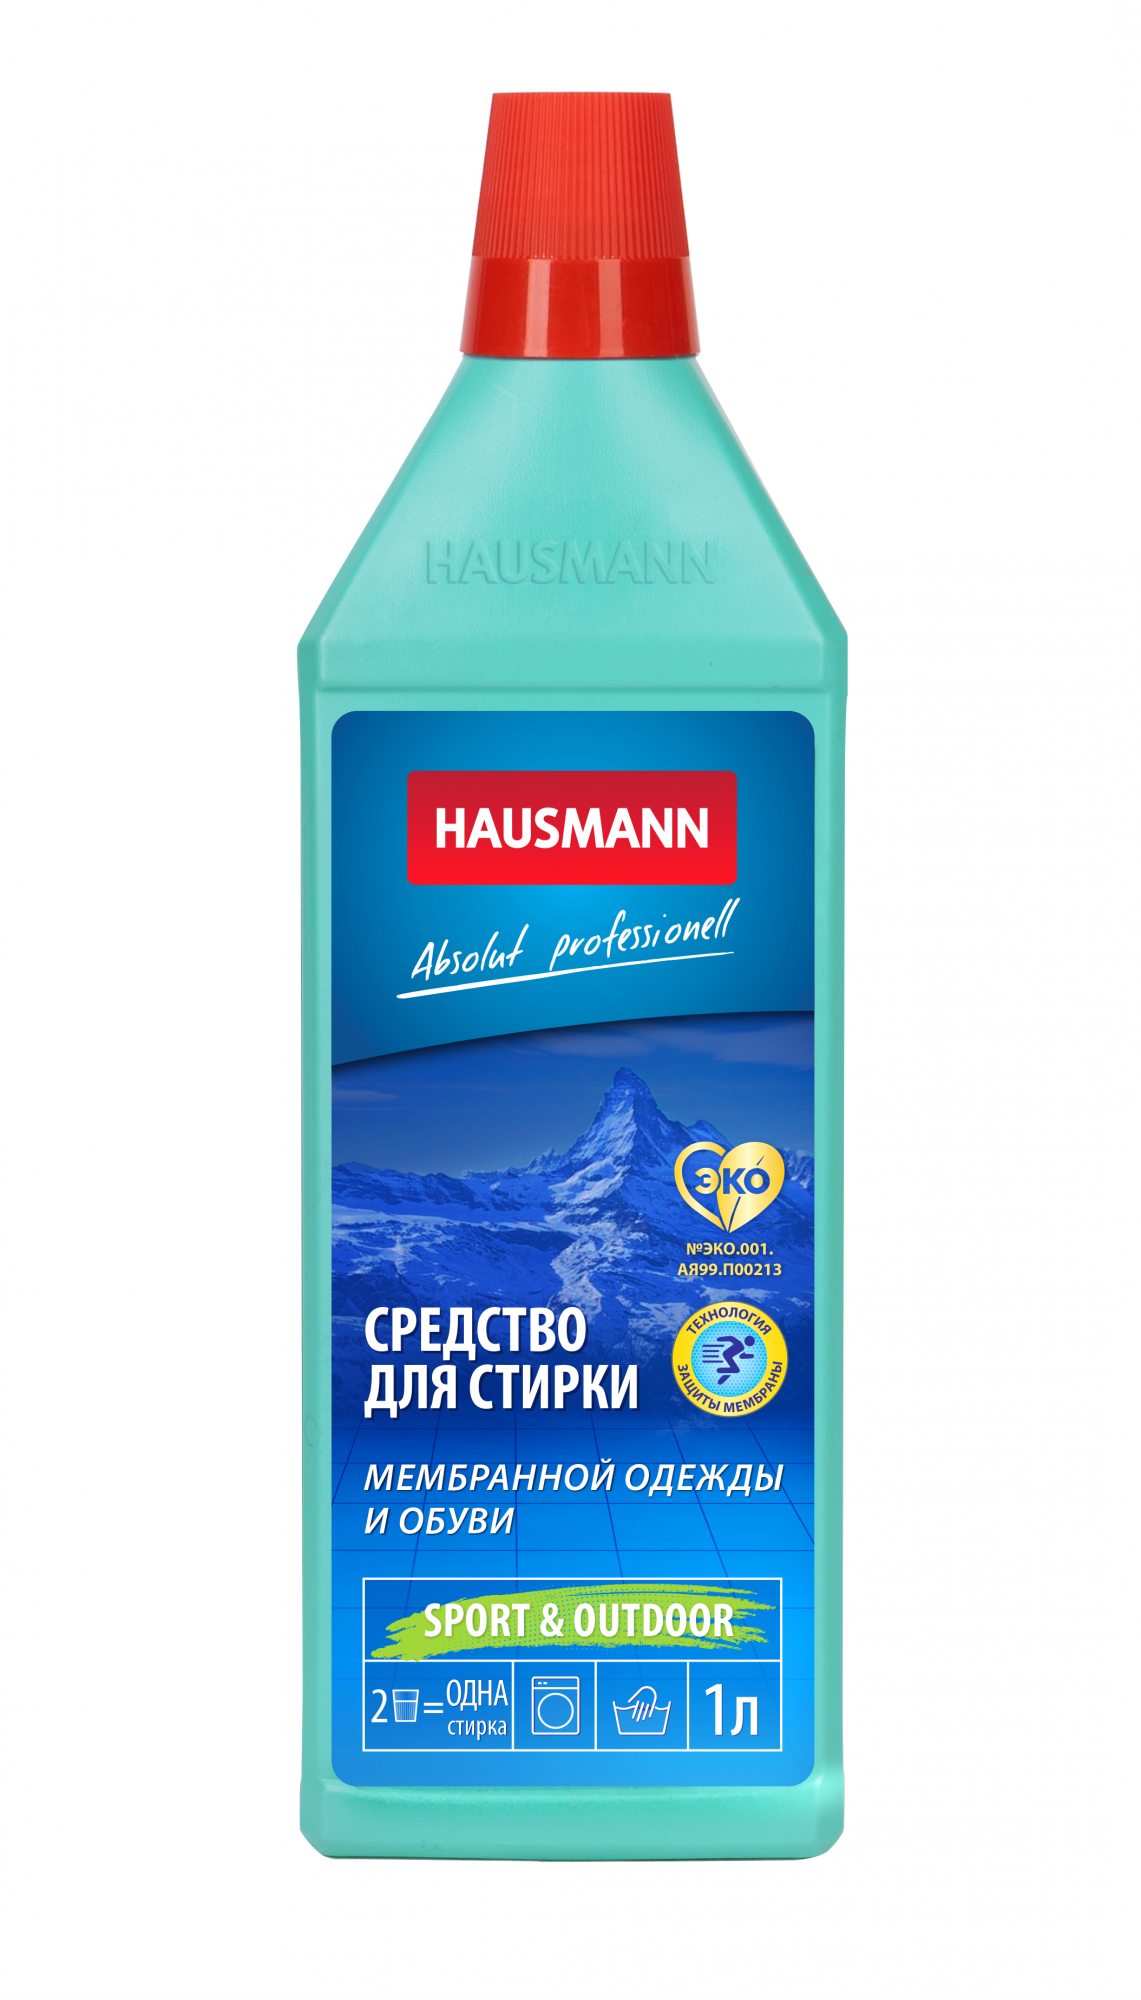 HM-CH-02 004 -       1. (Hausmann HM-CH-02 004)